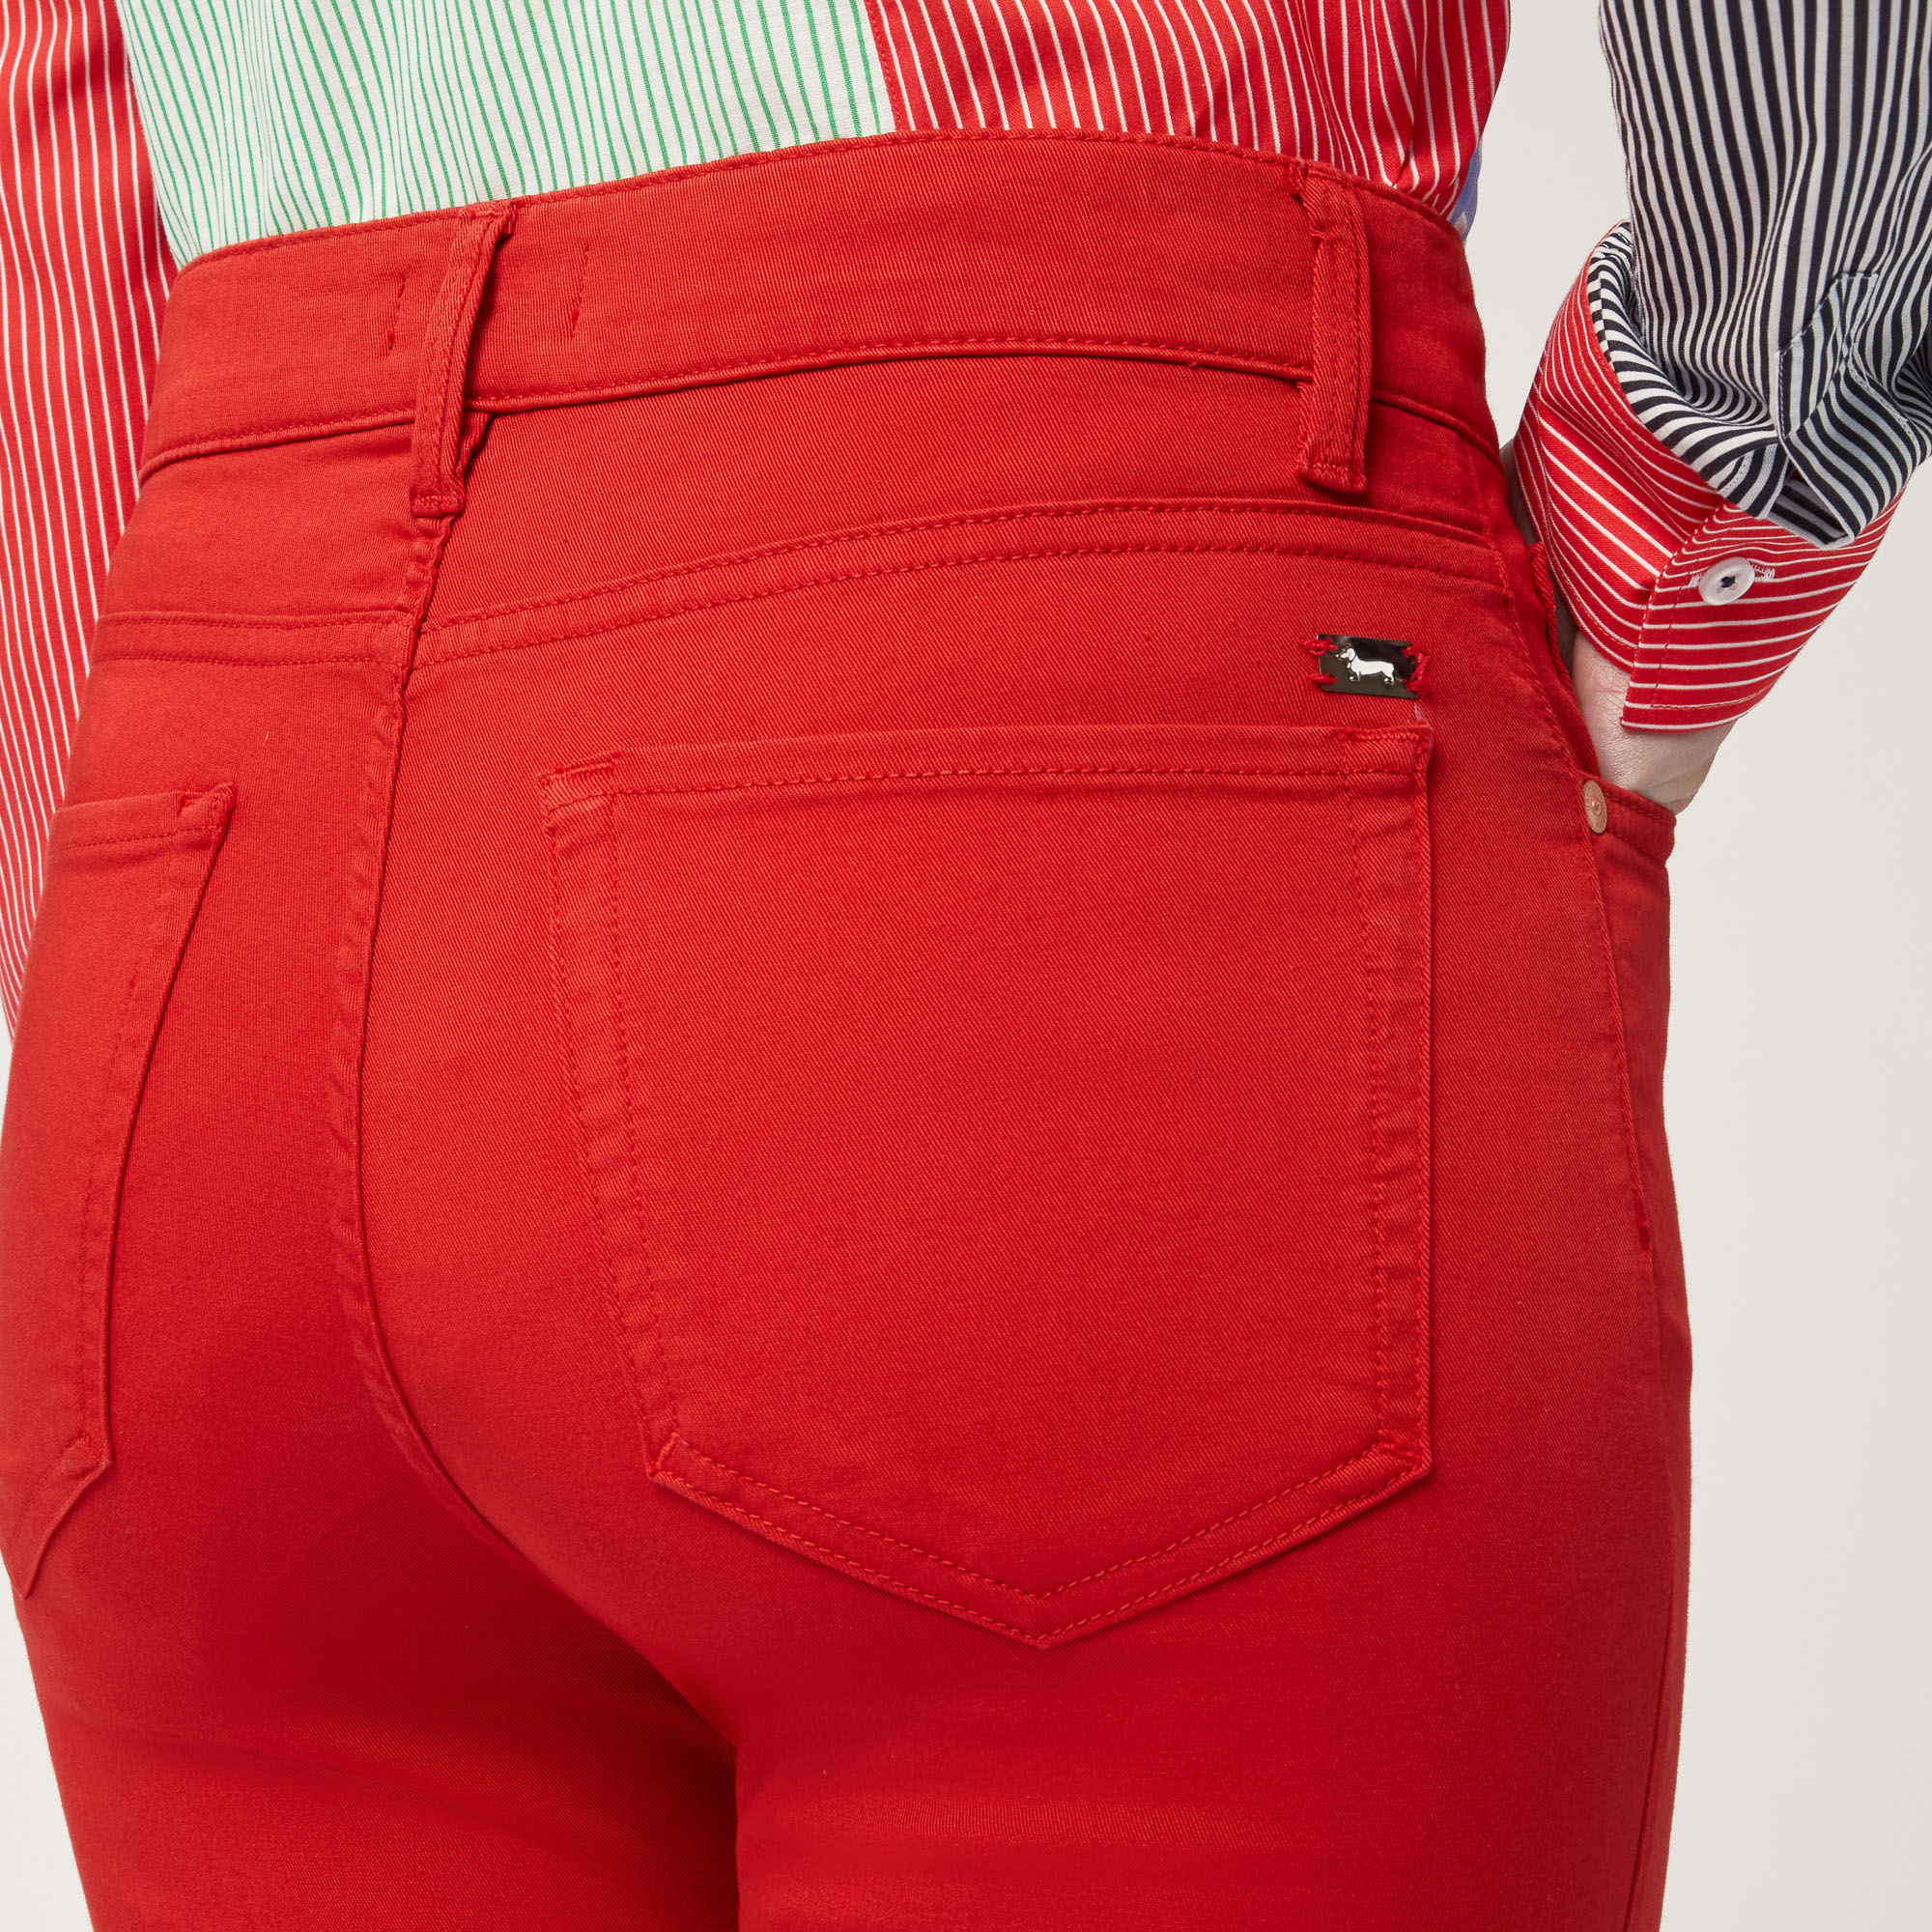 Slim Fit Pants, Light Red, large image number 2